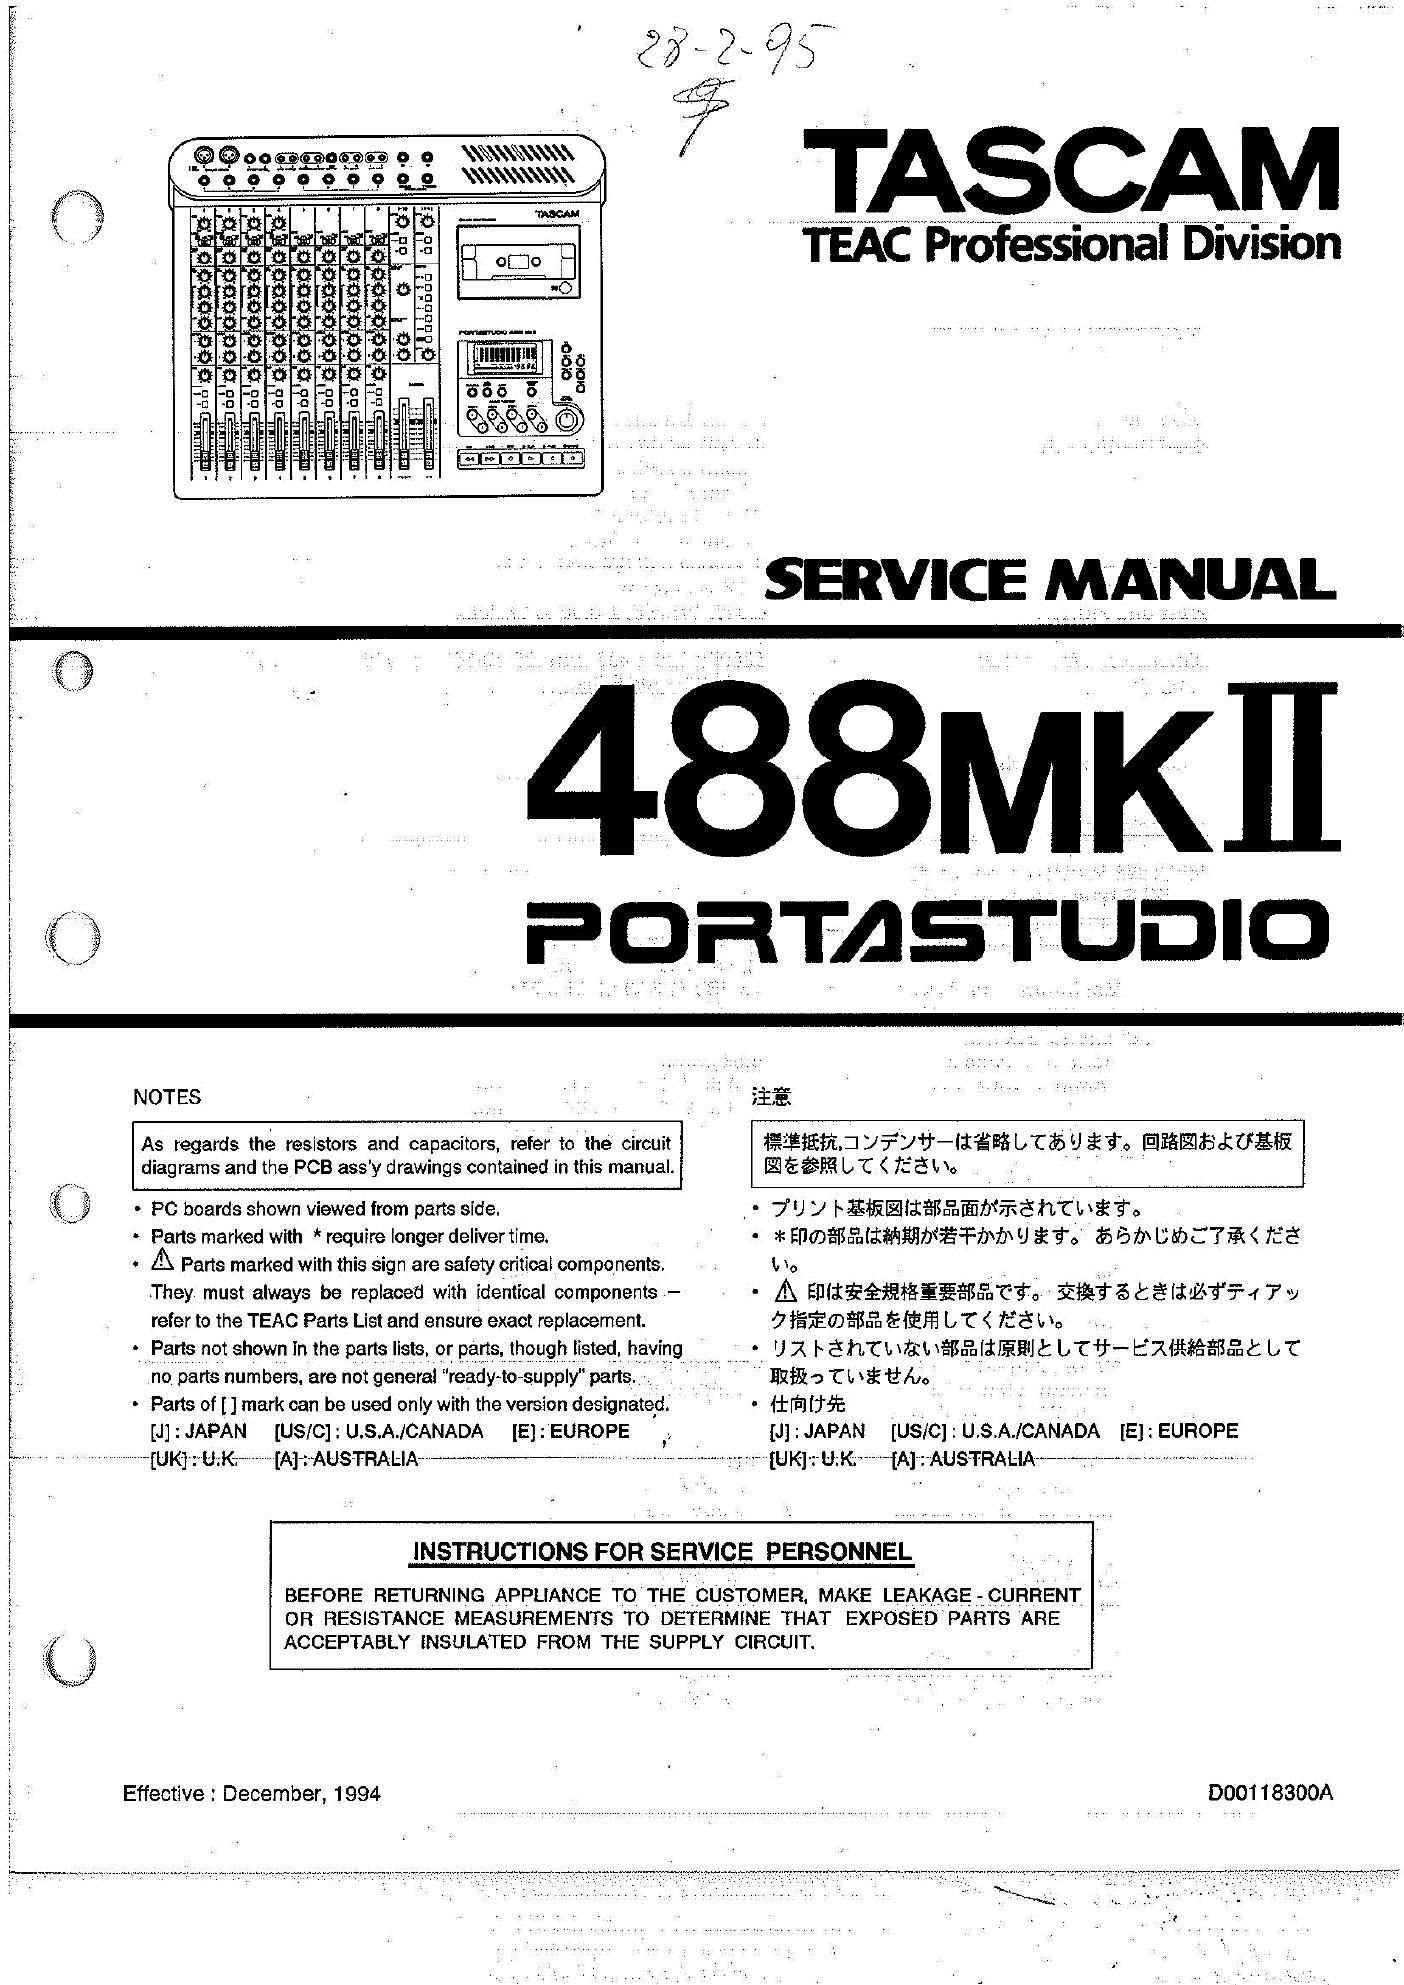 Tascam 488 Portastudio Mk II Service Manual